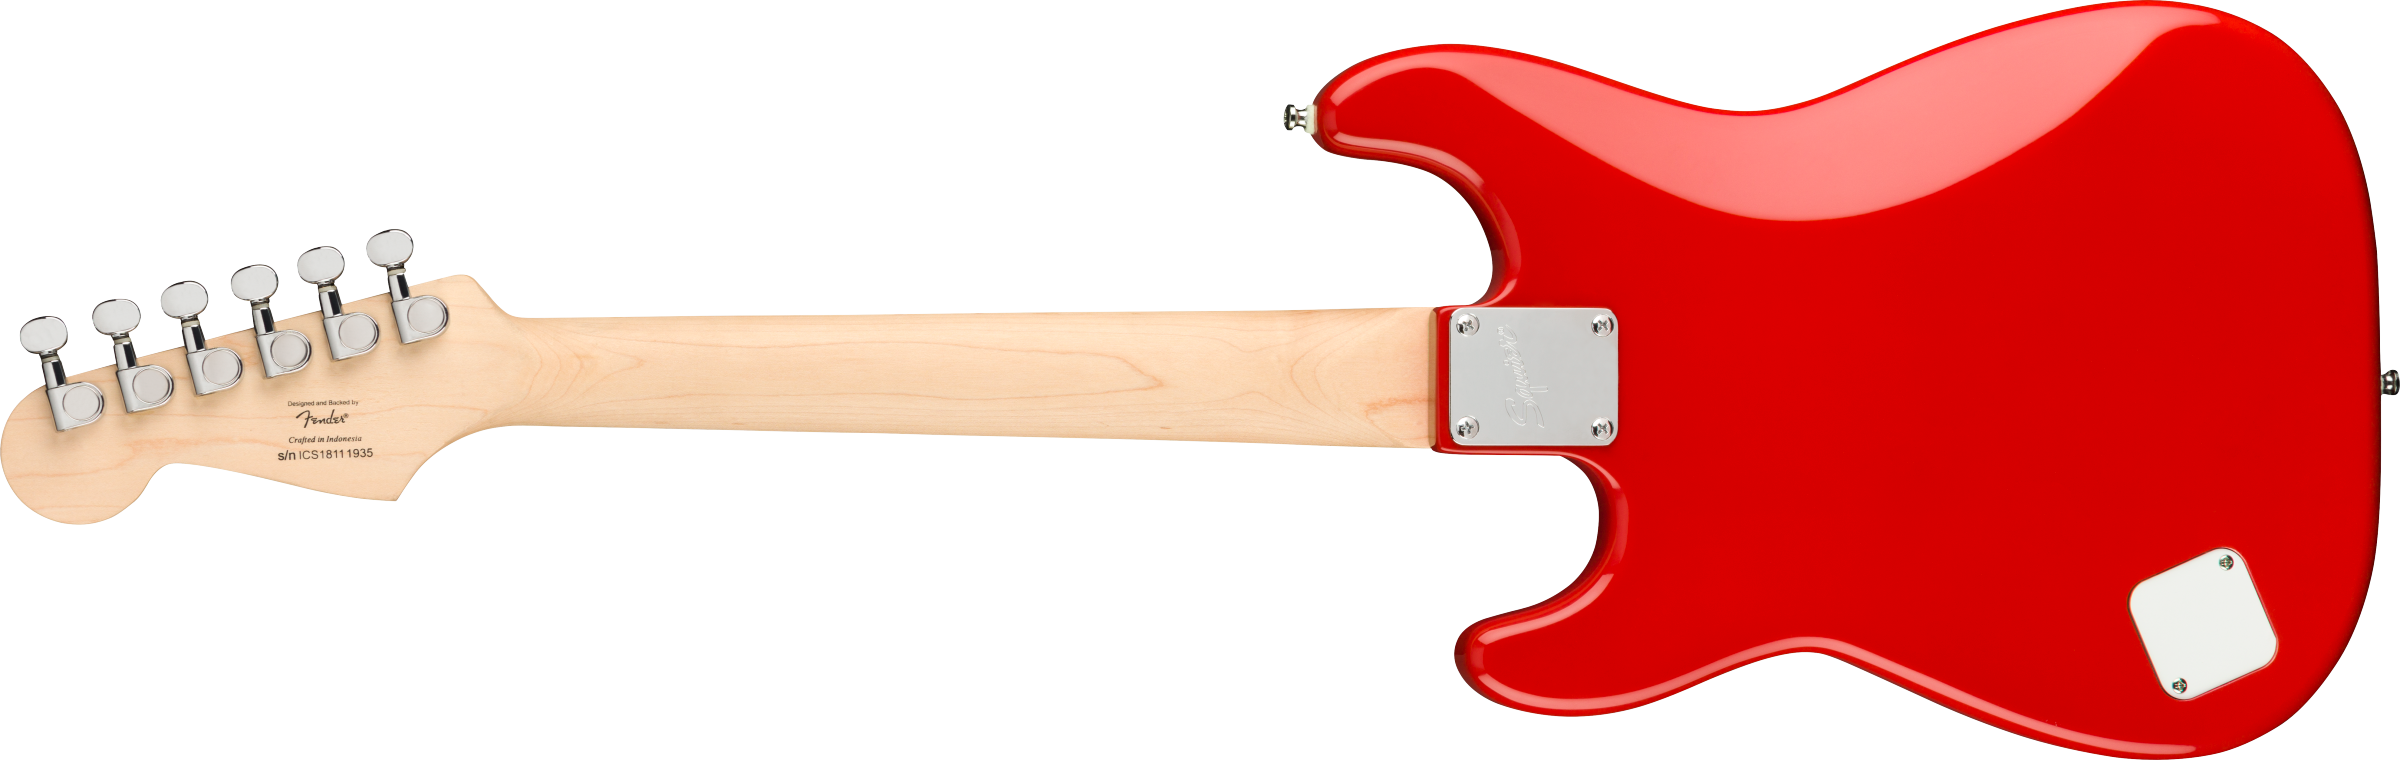 Fender Squier Mini Stratocaster®, Laurel Fingerboard, Torino Red